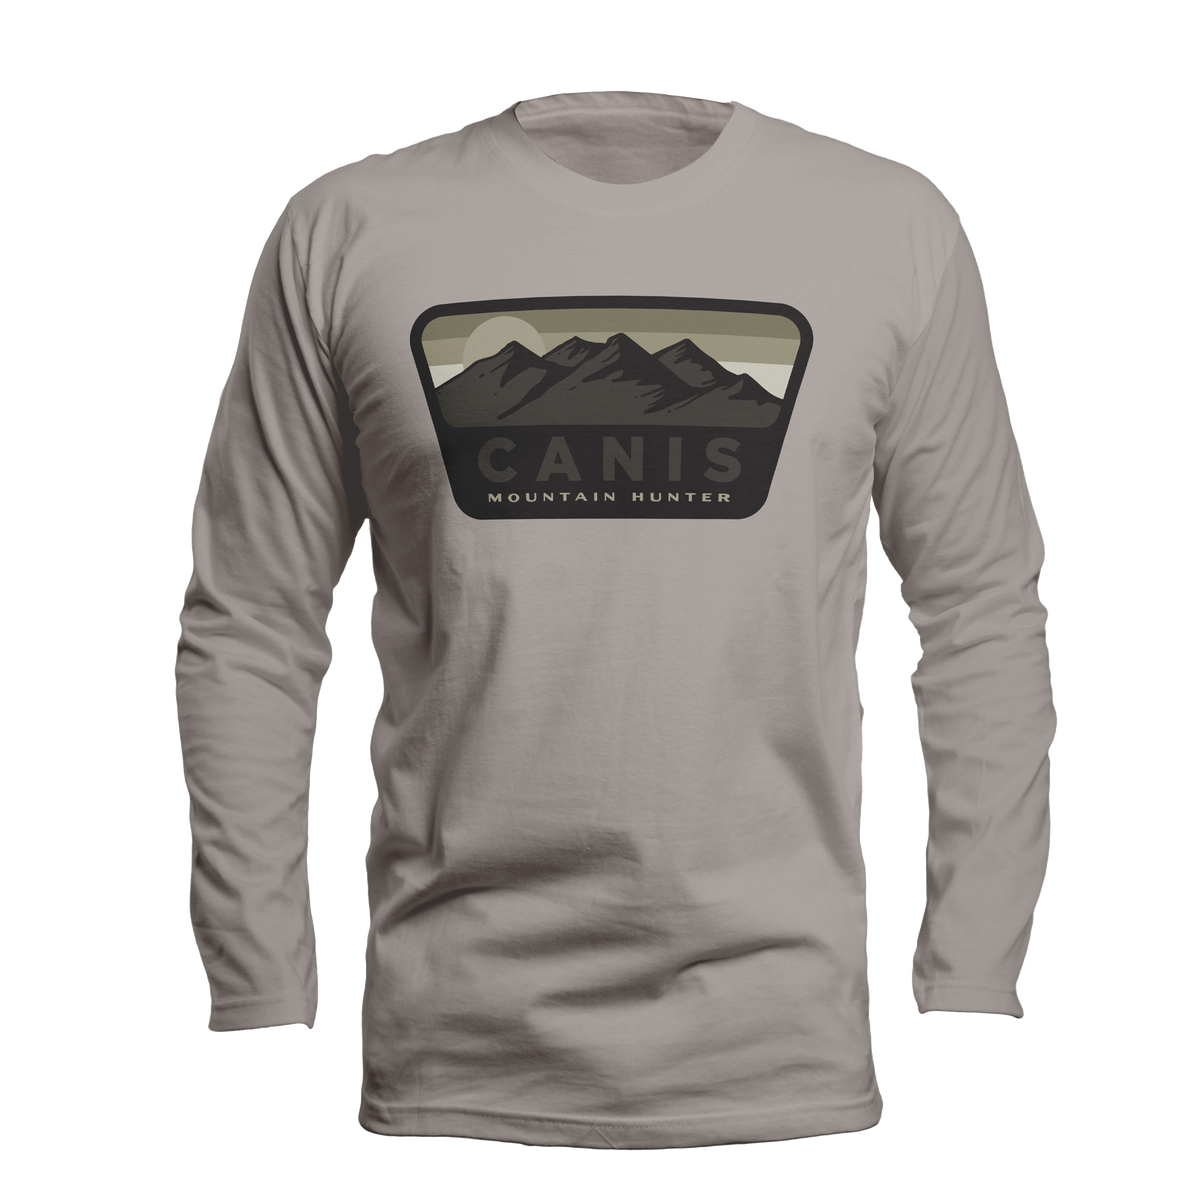 CANIS Mountain Hunter LS- Great Longsleeve Hunting T-Shirt